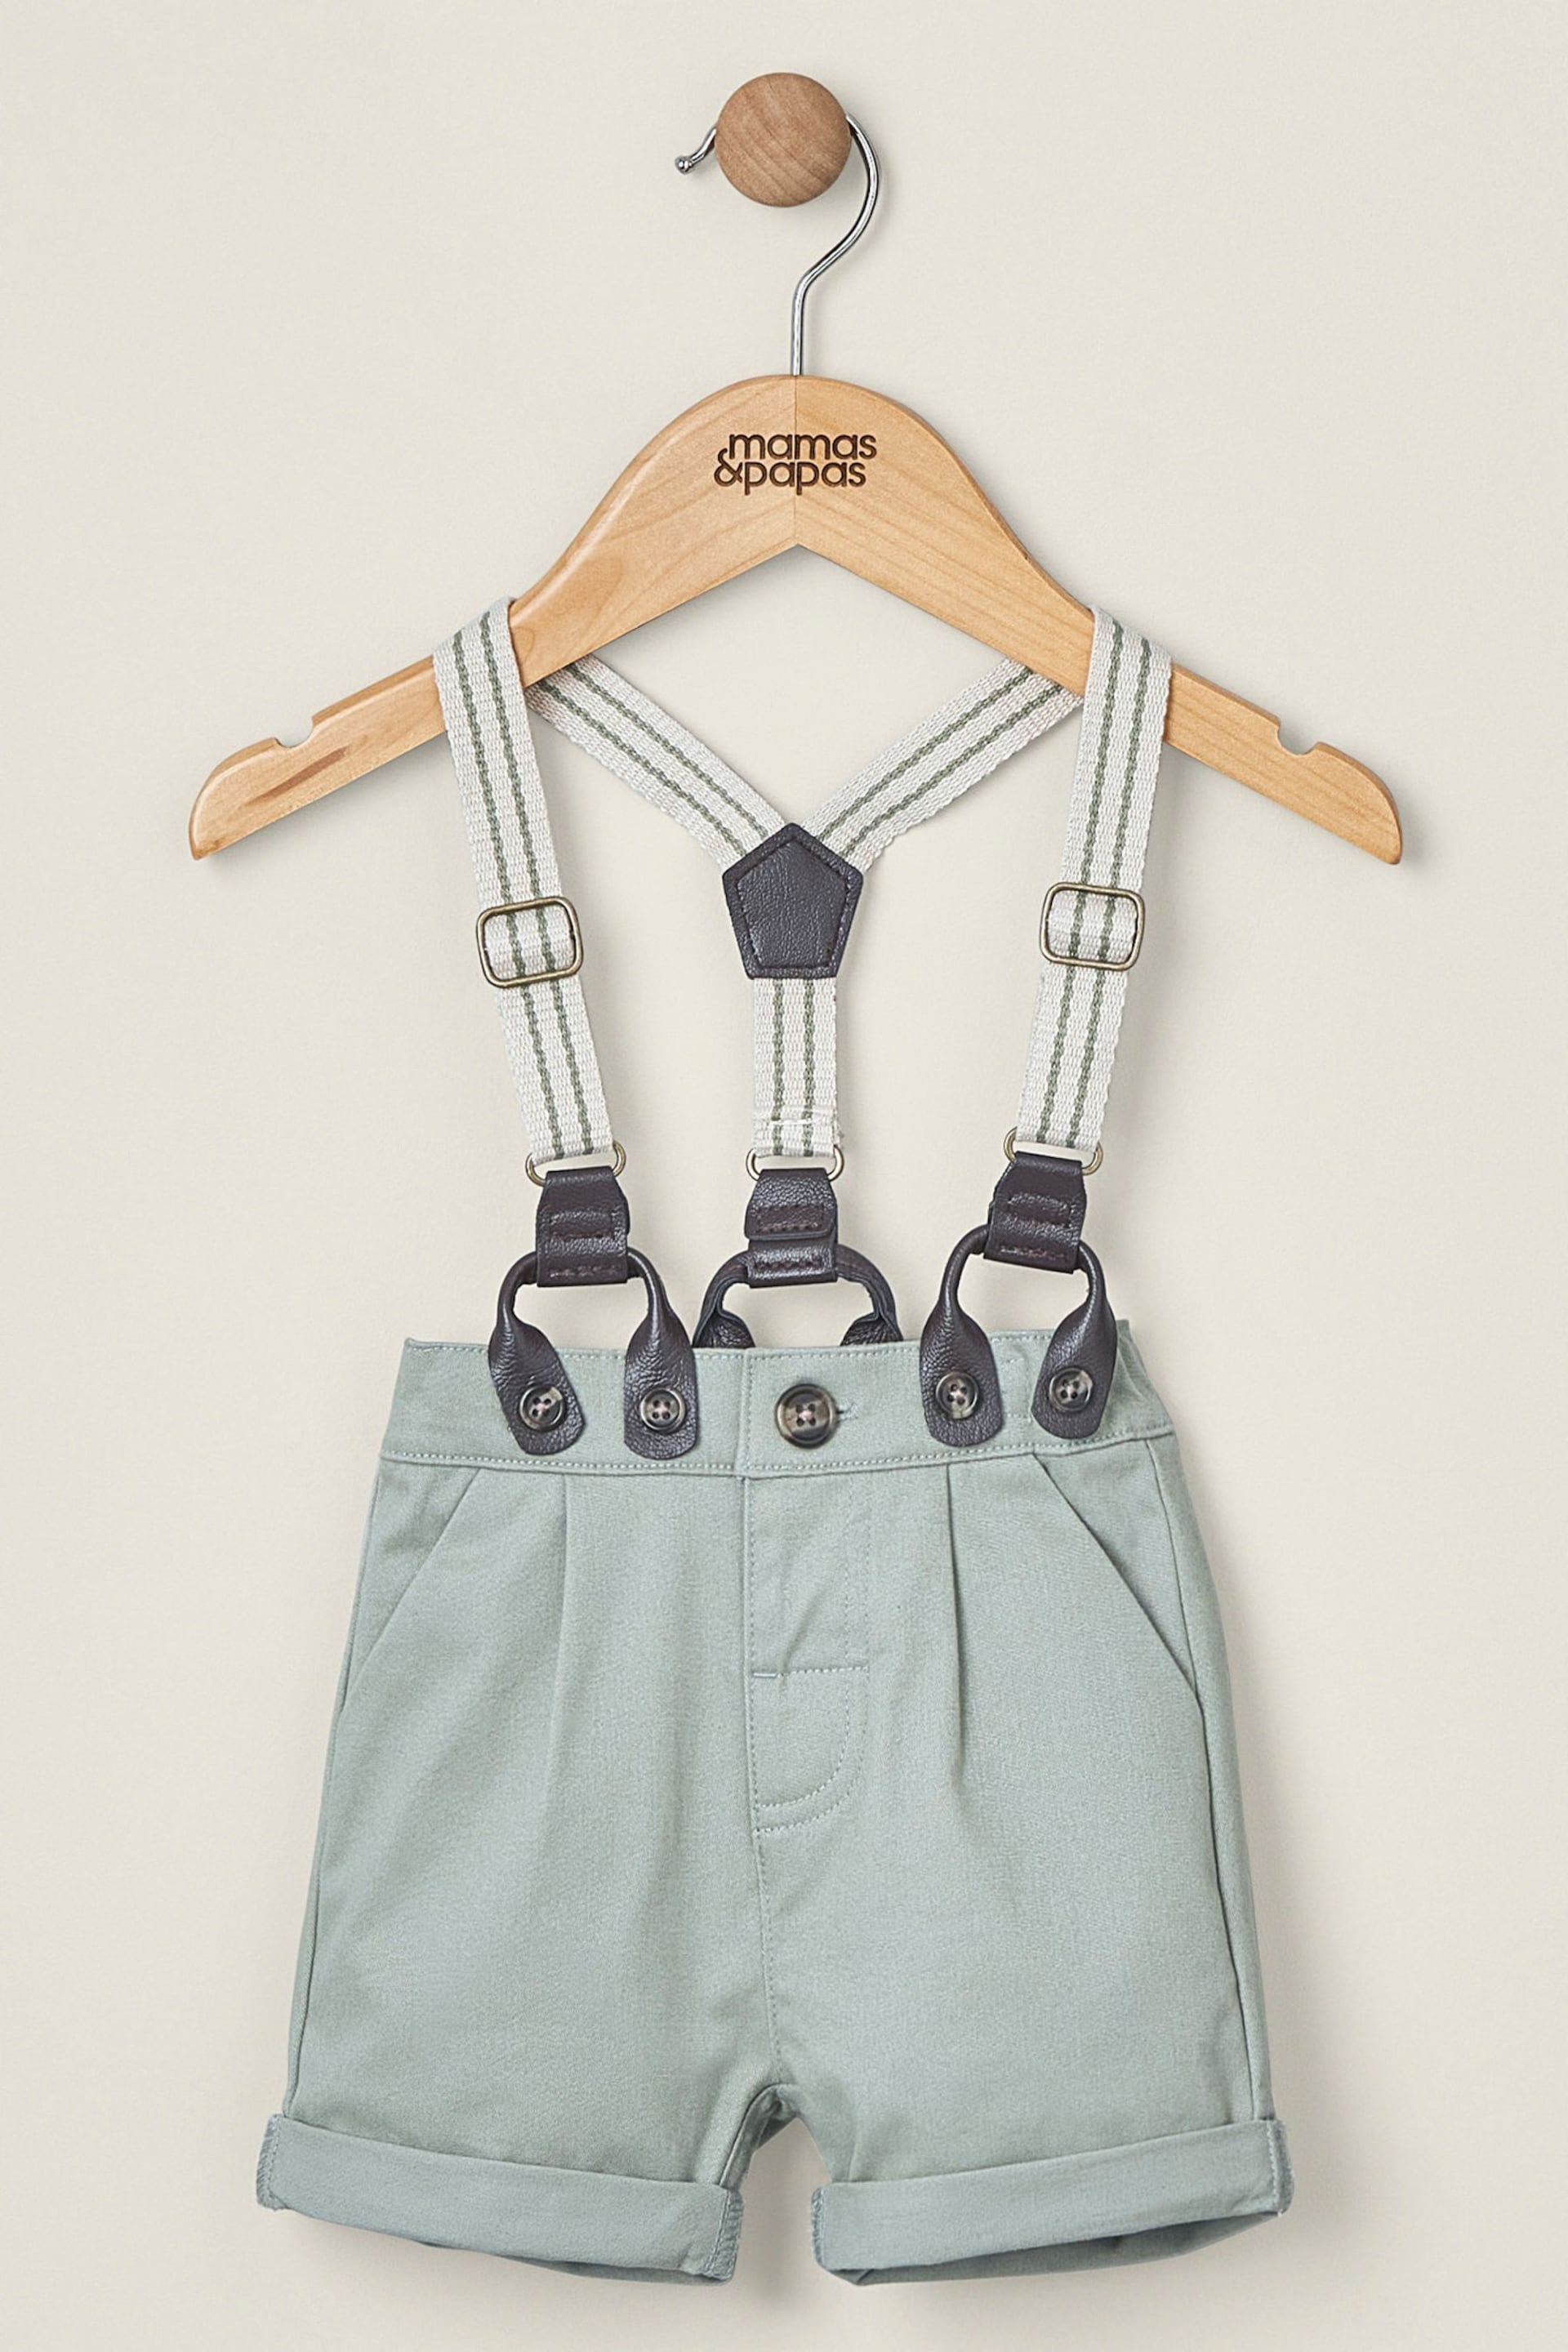 Mamas & Papas Green Chinos Shorts With Stripe Braces - Image 1 of 4